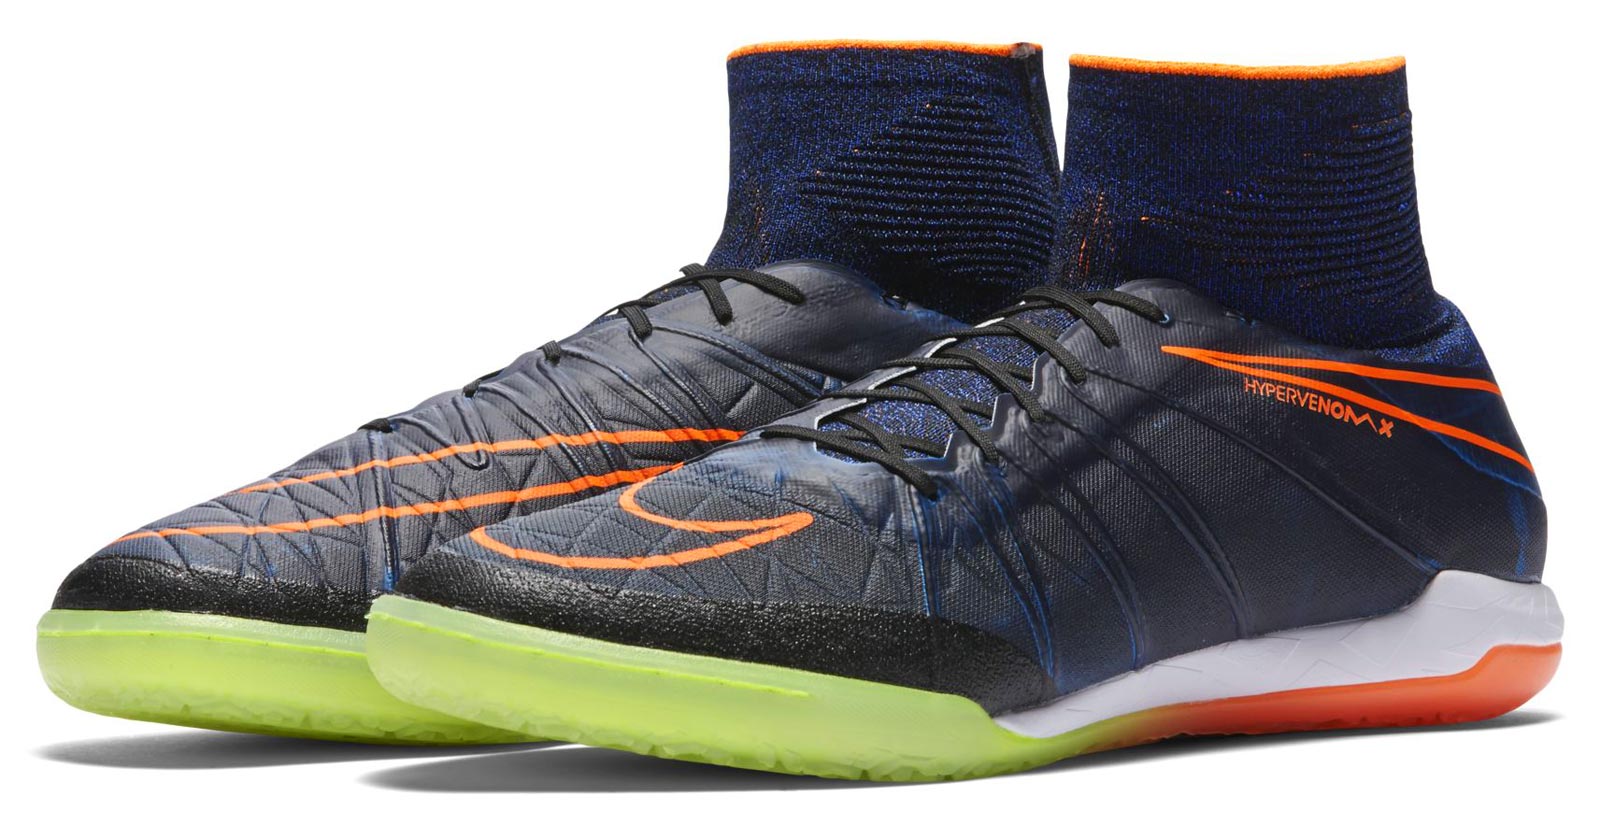  Nike Hypervenom  X Distressed Indigo 2022 Boots Released 